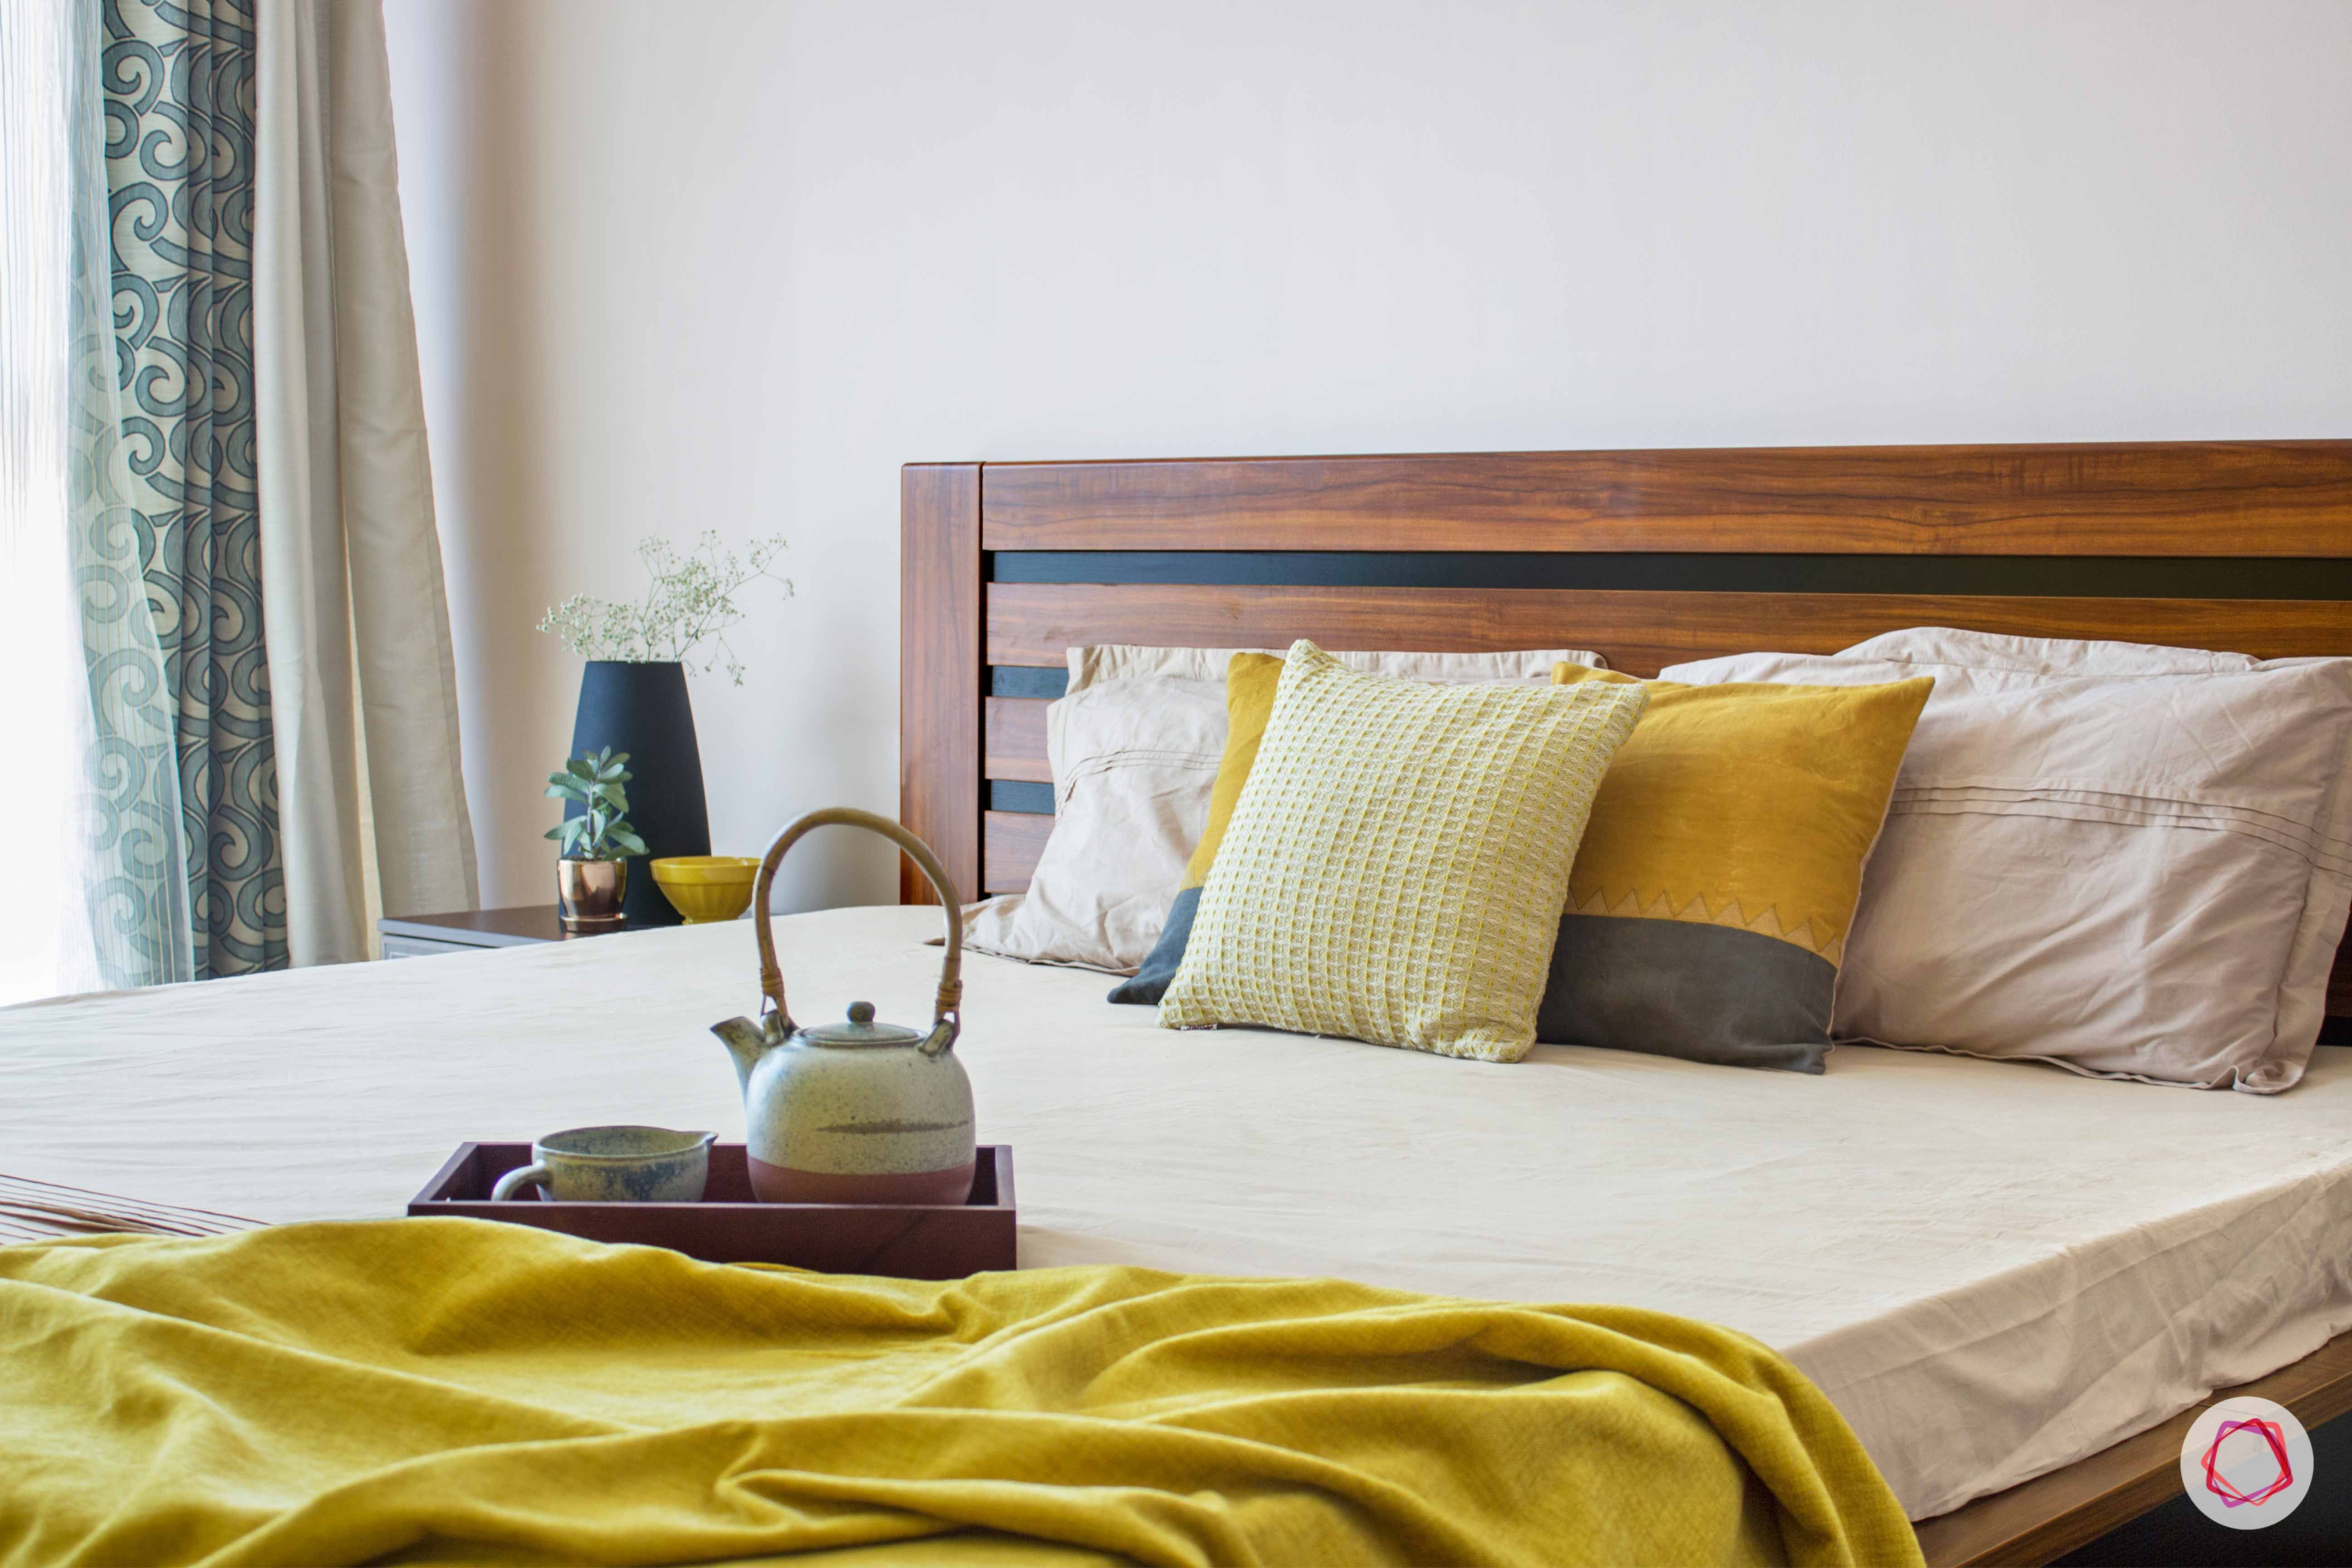 snn raj greenbay-master bedroom-yellow throw-wooden bed-cushions